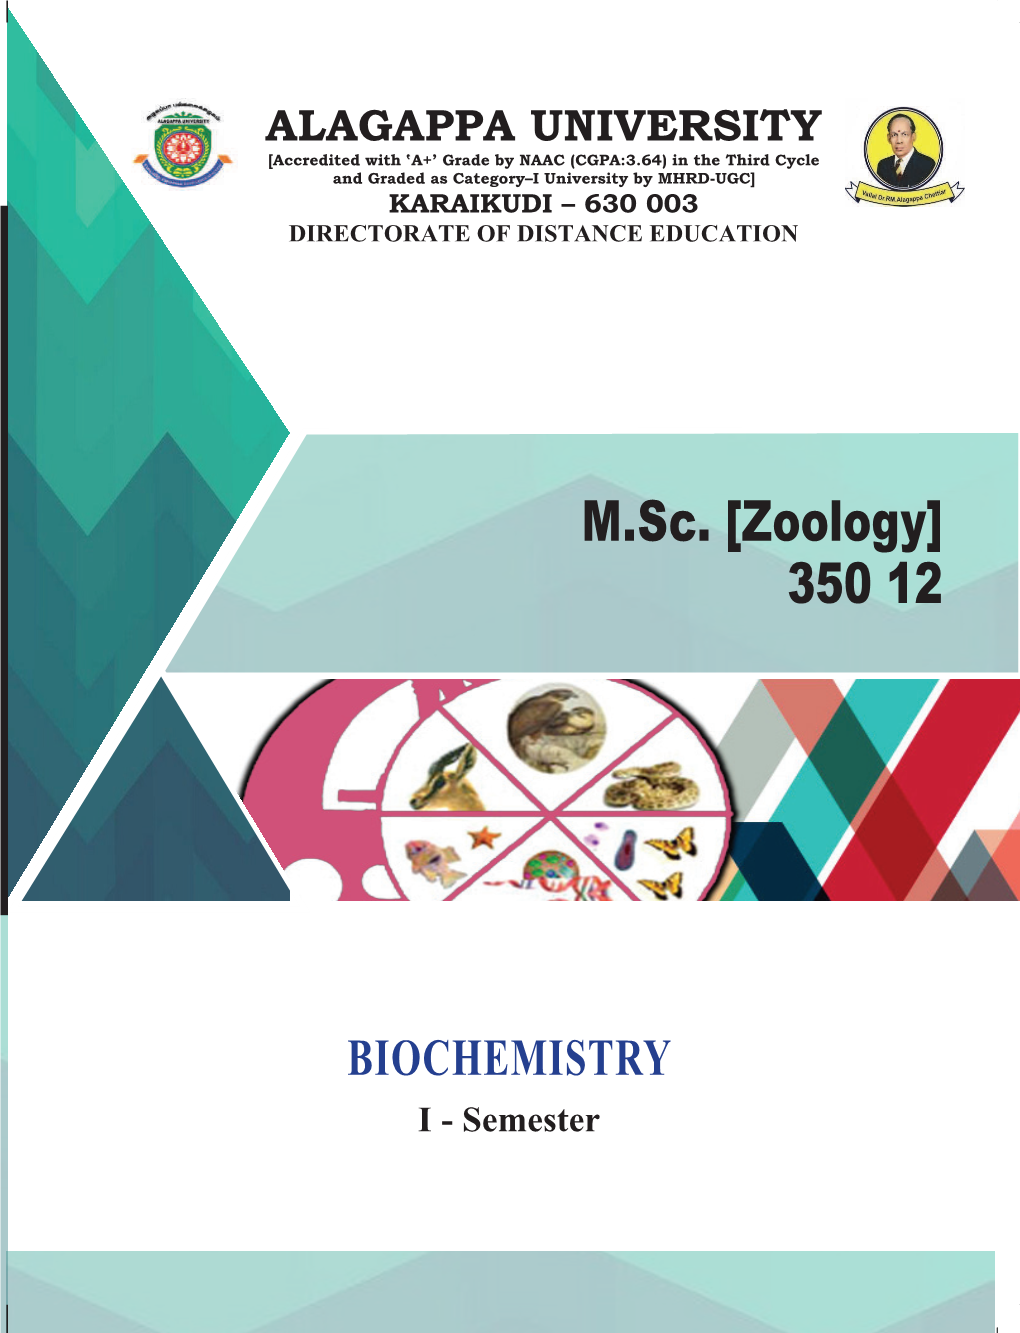 M.Sc. [Zoology] 350 12